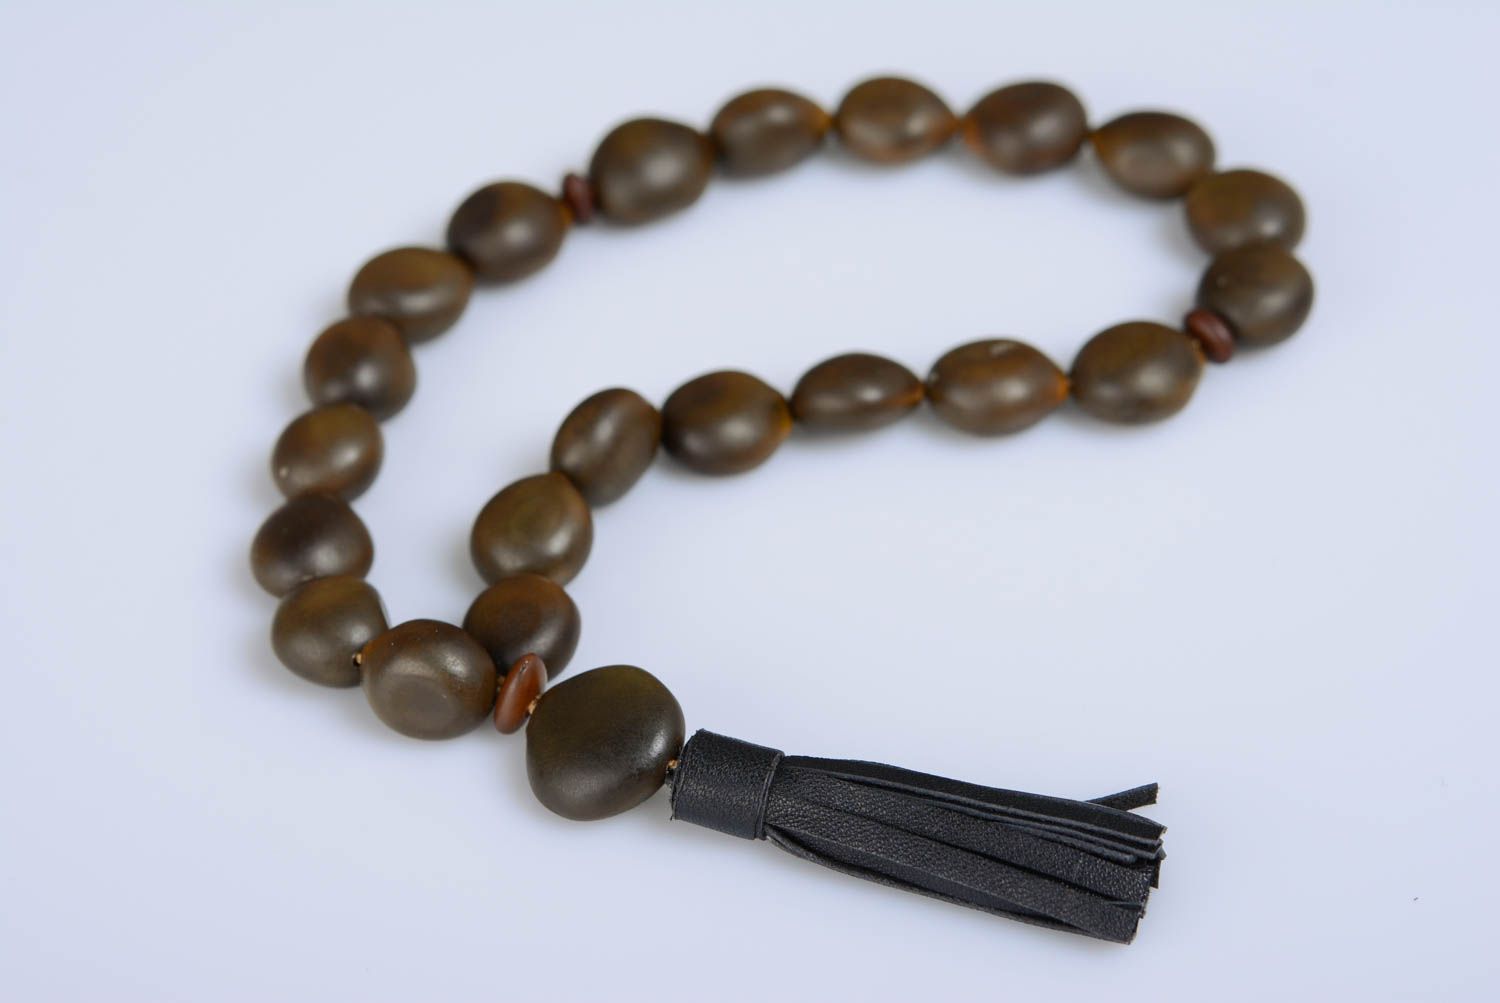 Handmade wooden prayer beads wooden rosary beads meditation supplies gift ideas photo 1